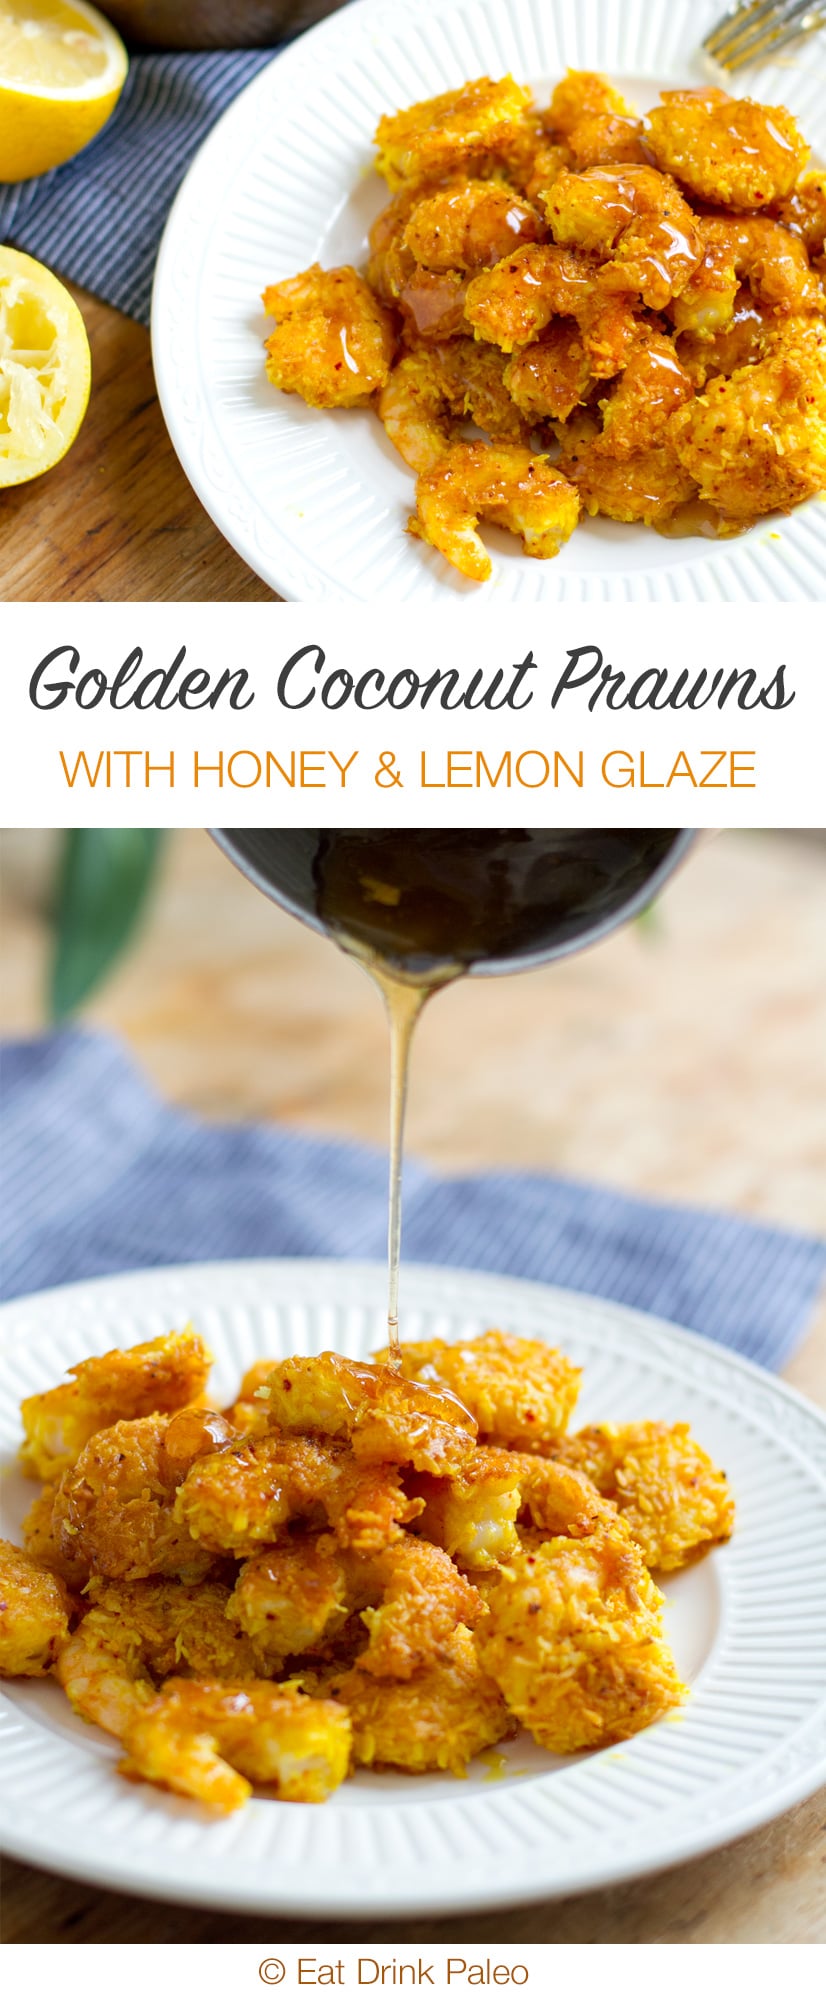 Golden Coconut Shrimp with Honey Lemon Glaze - fantastic paleo friendly recipes using juicy prawns